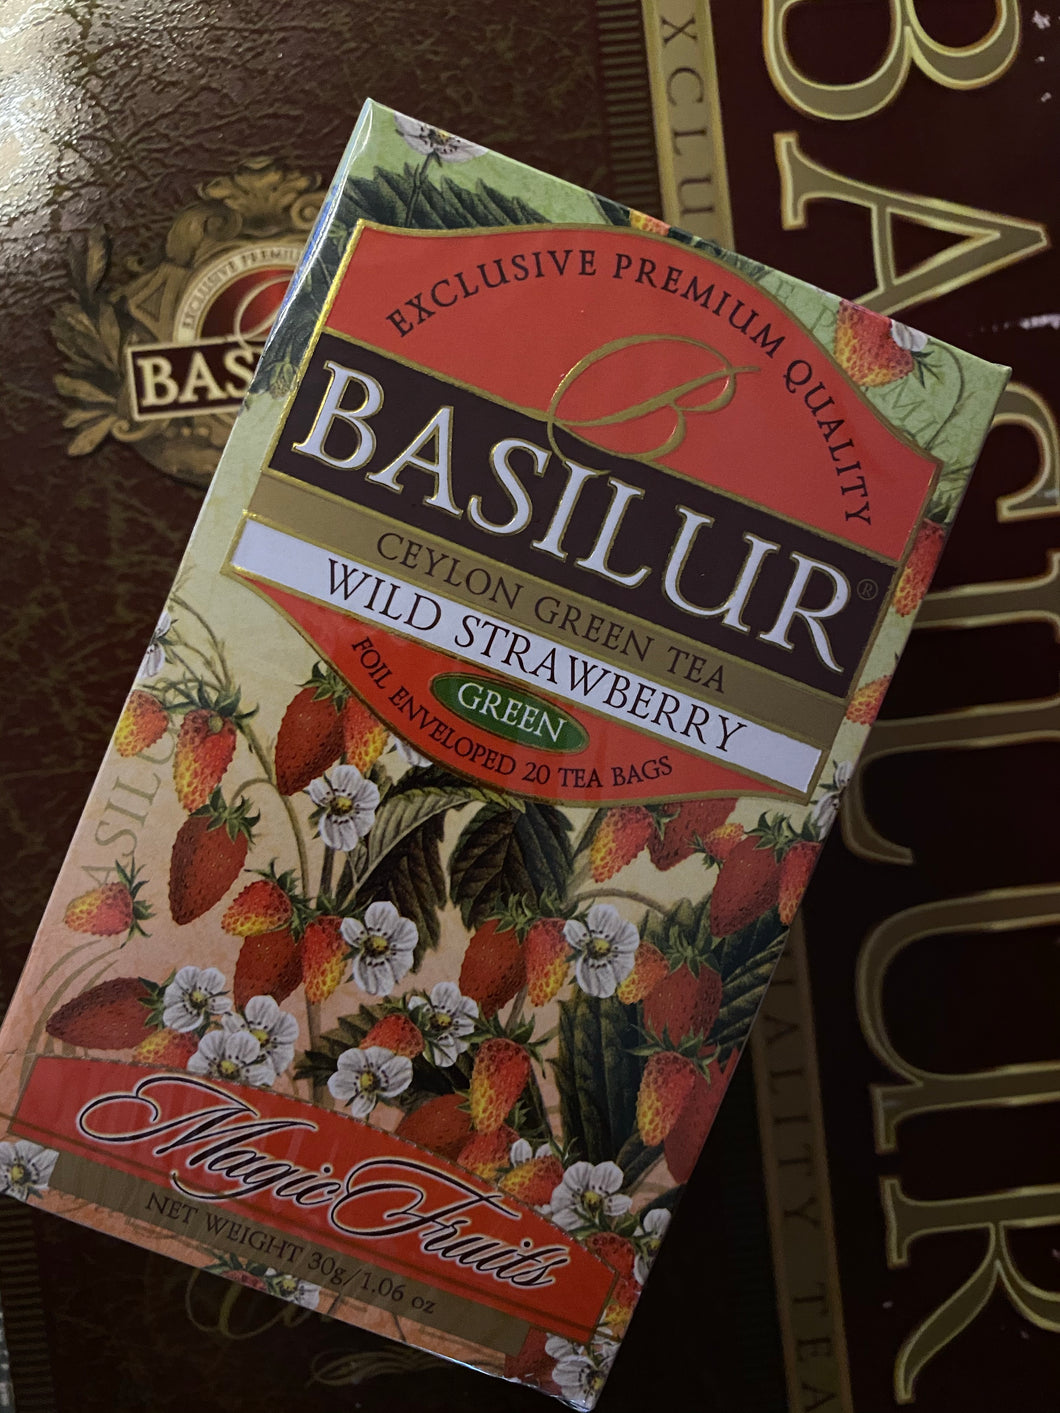 Basilur Tea Magic Fruits Wild Strawberry Ceylon Green Tea